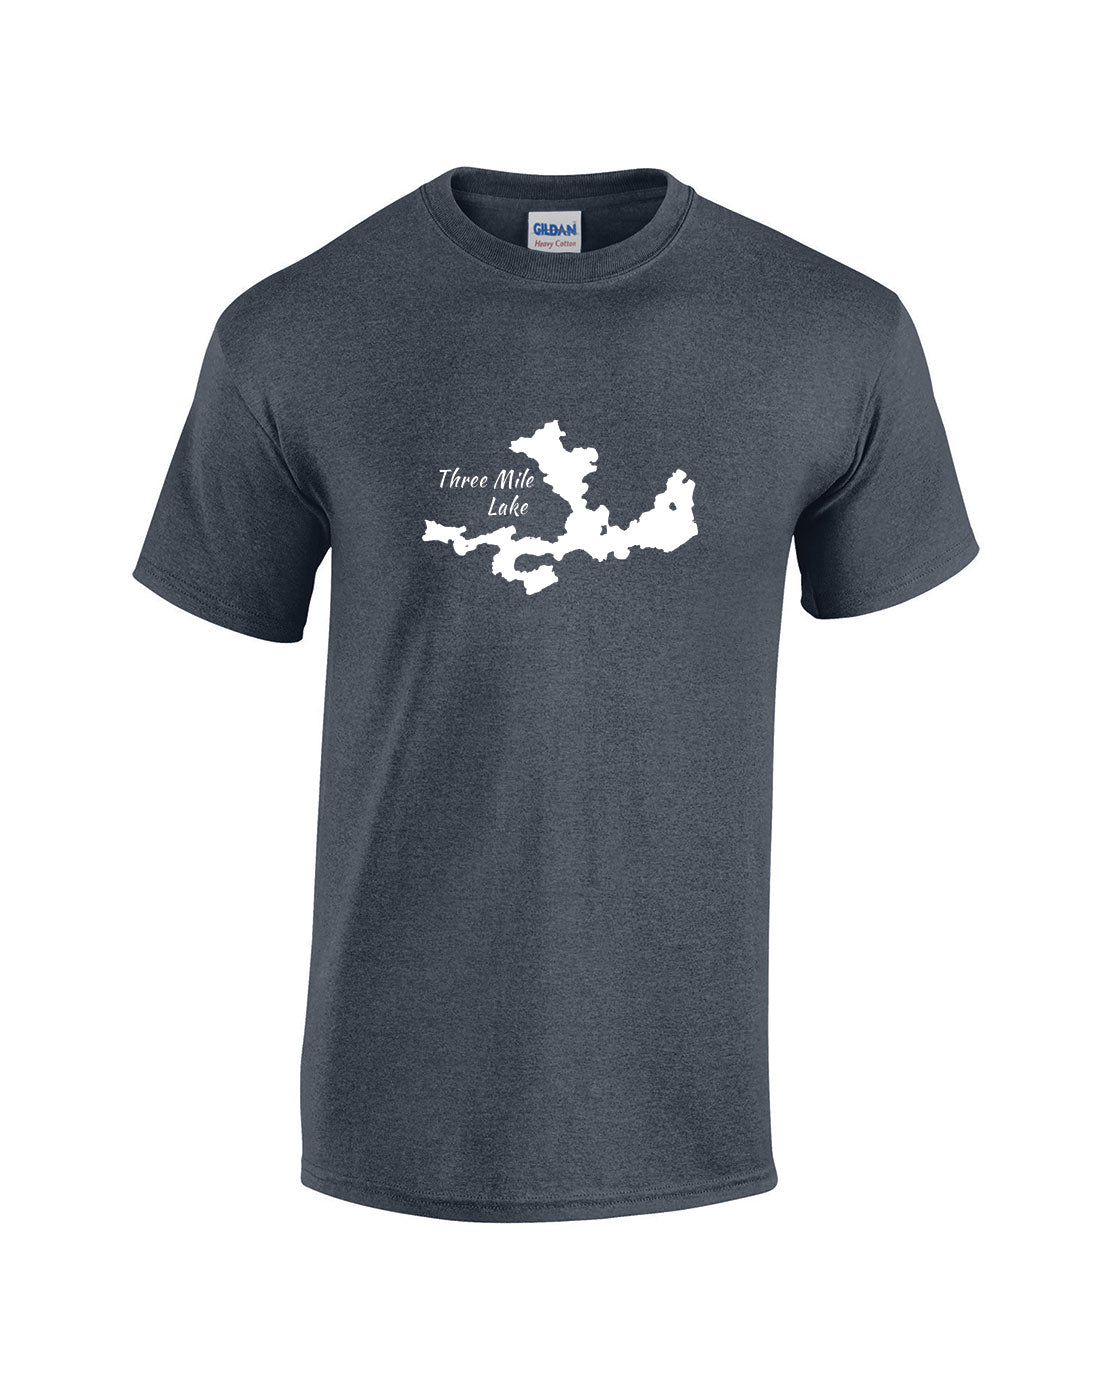 Three Mile Lake T-Shirt